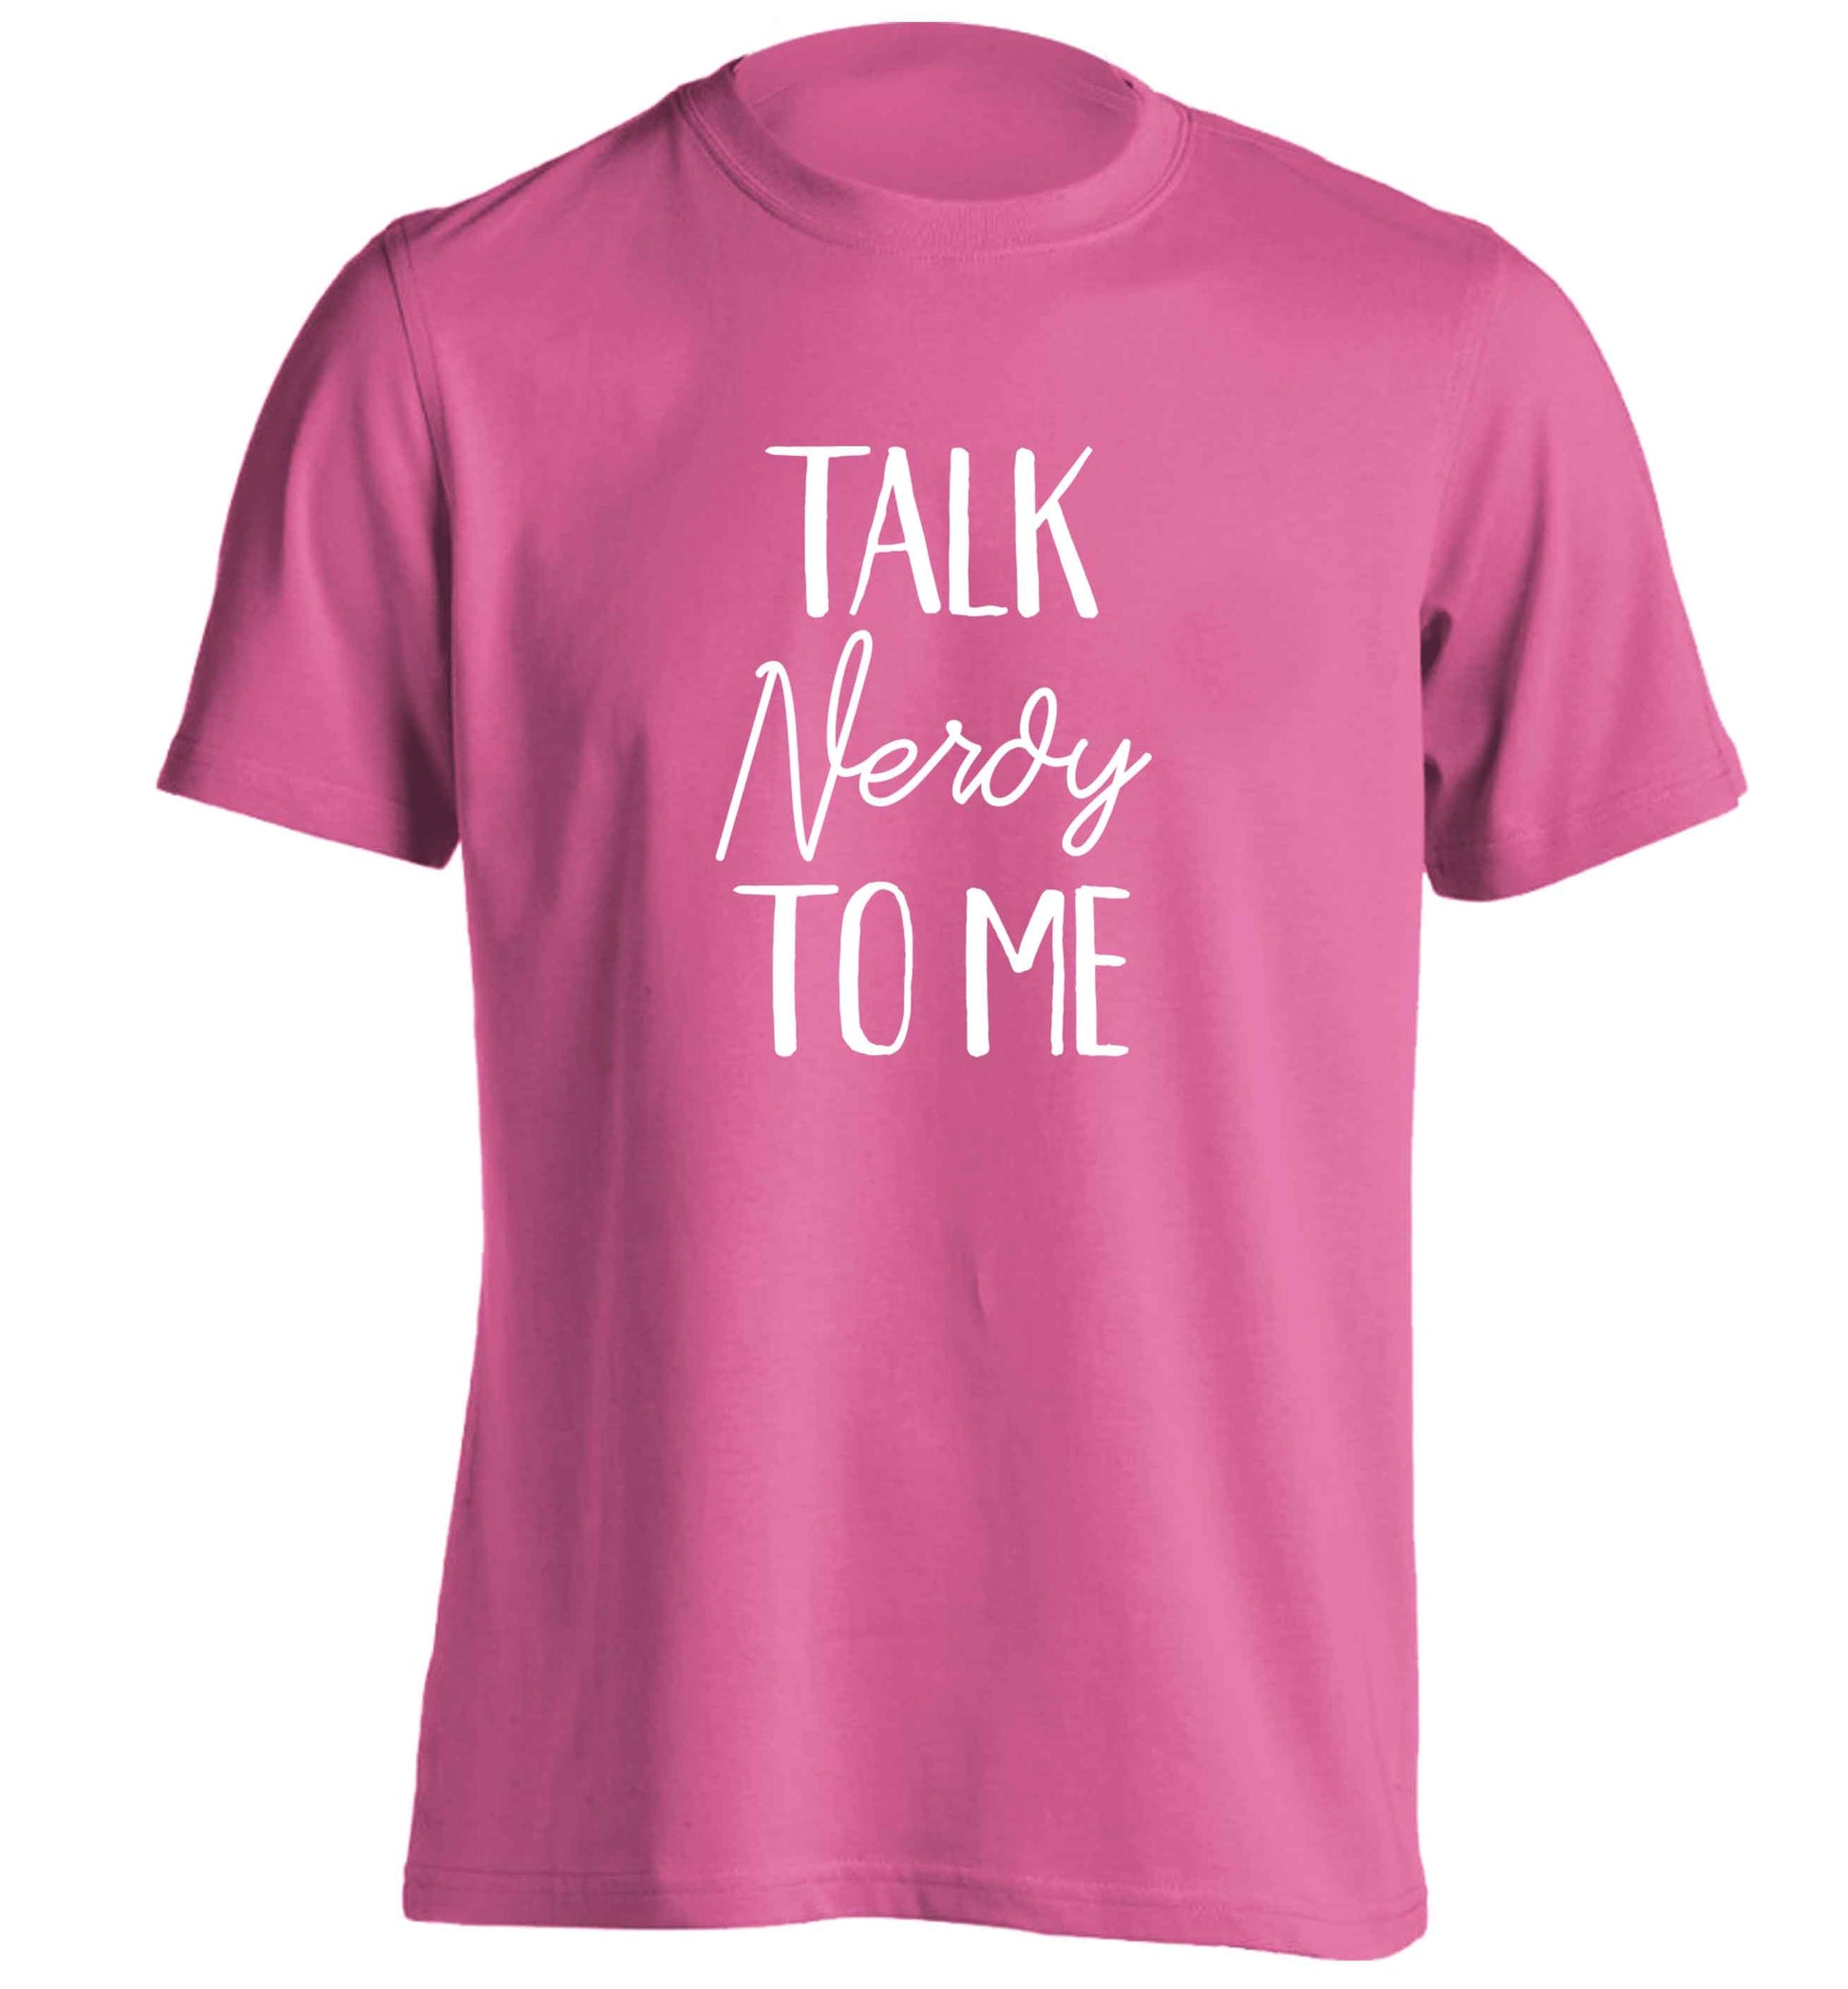 Talk nerdy to me adults unisex pink Tshirt 2XL